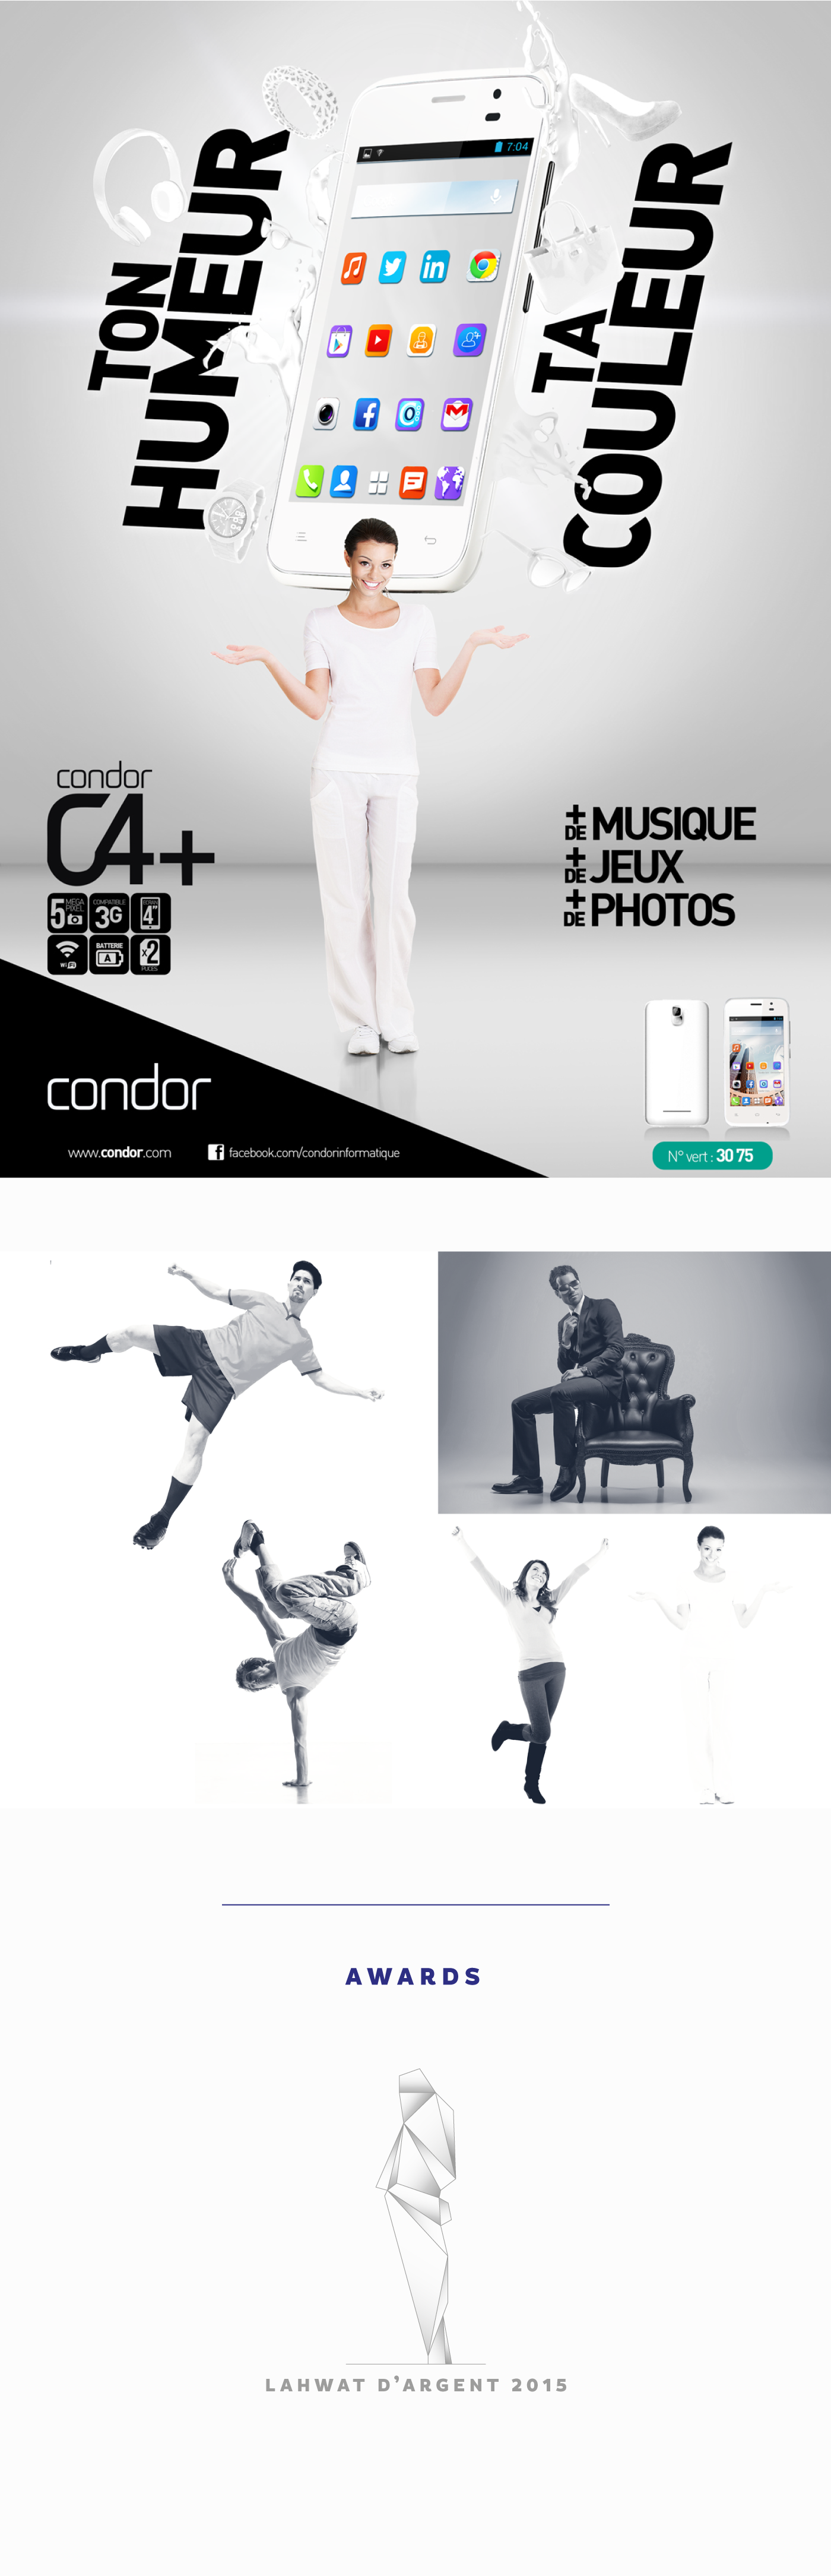 condor phone smartphone Algeria Awards colors Style